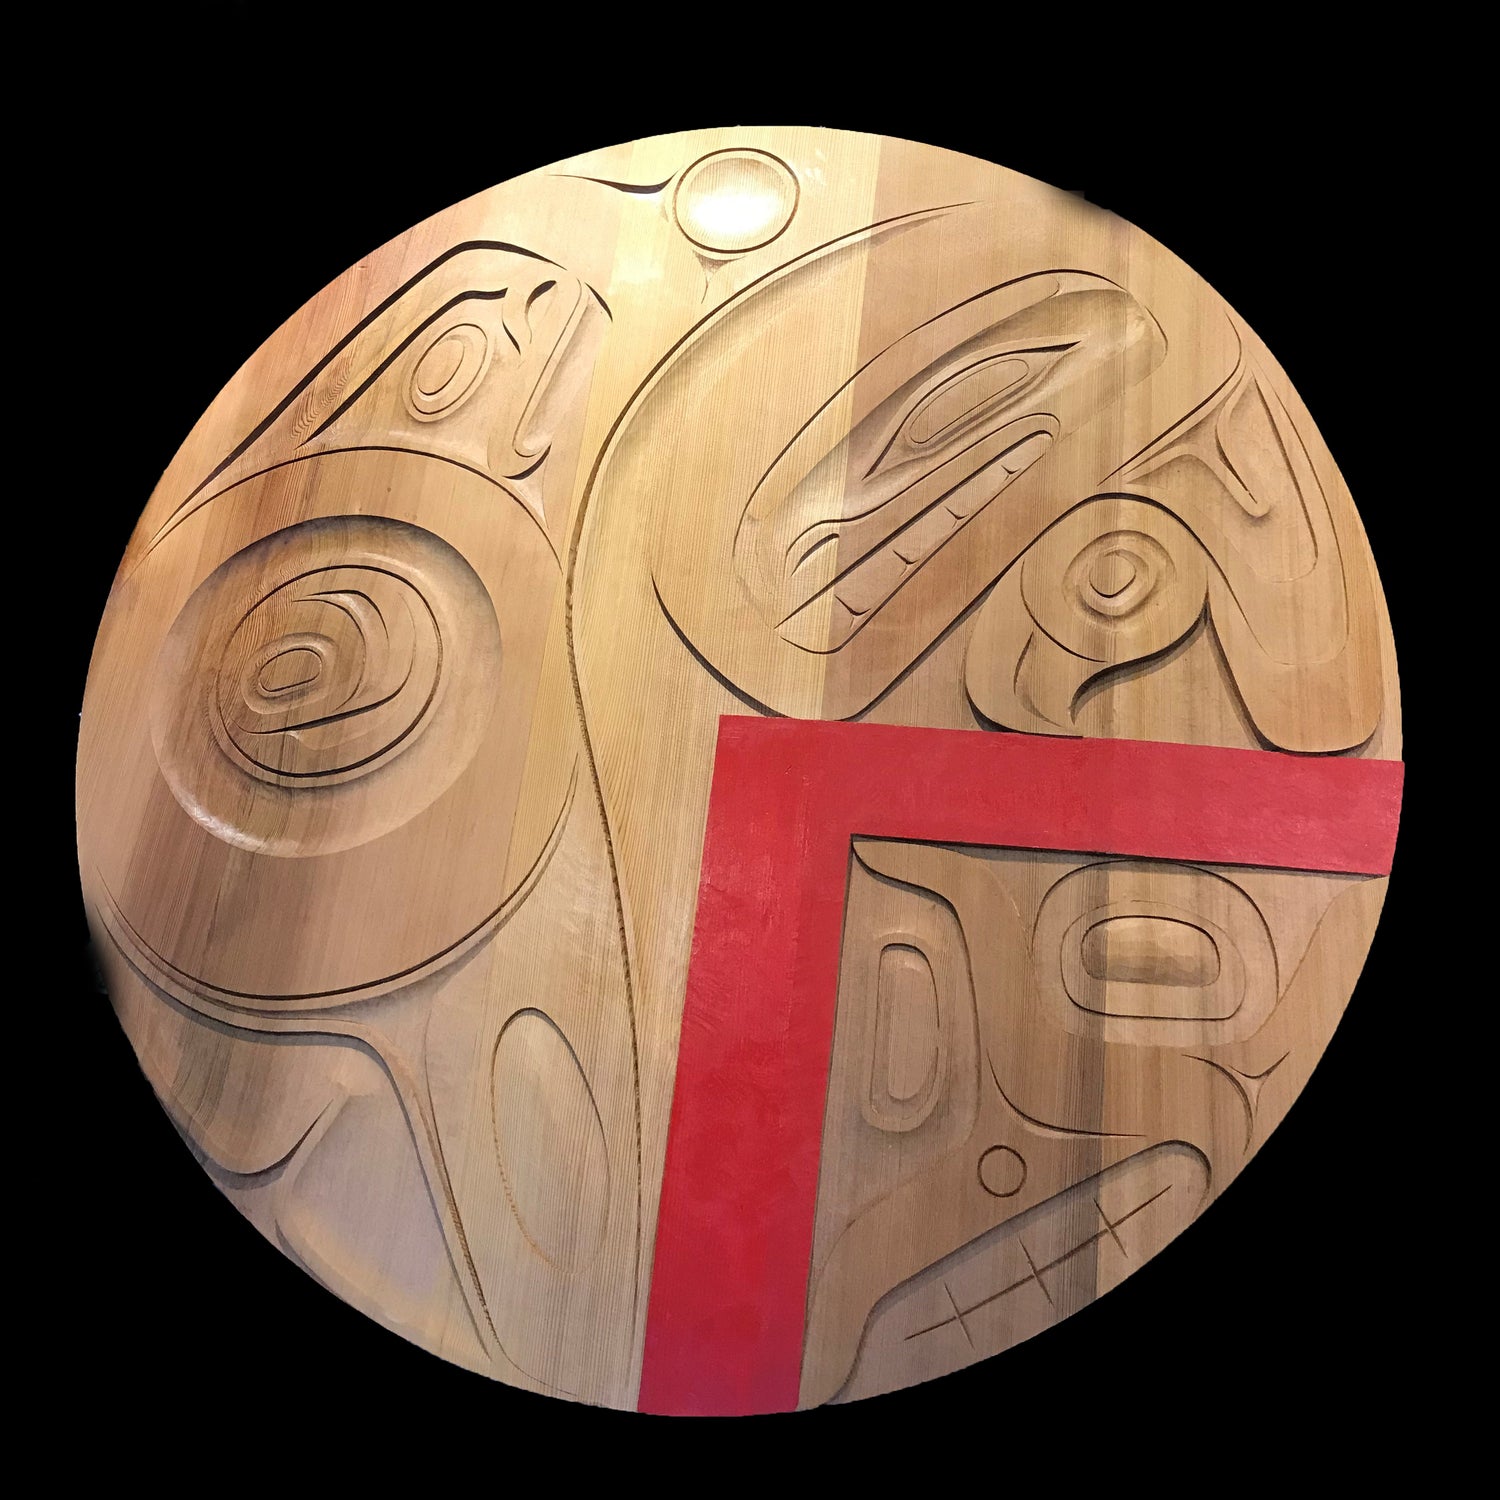 Tlingit Artist Robert Mills